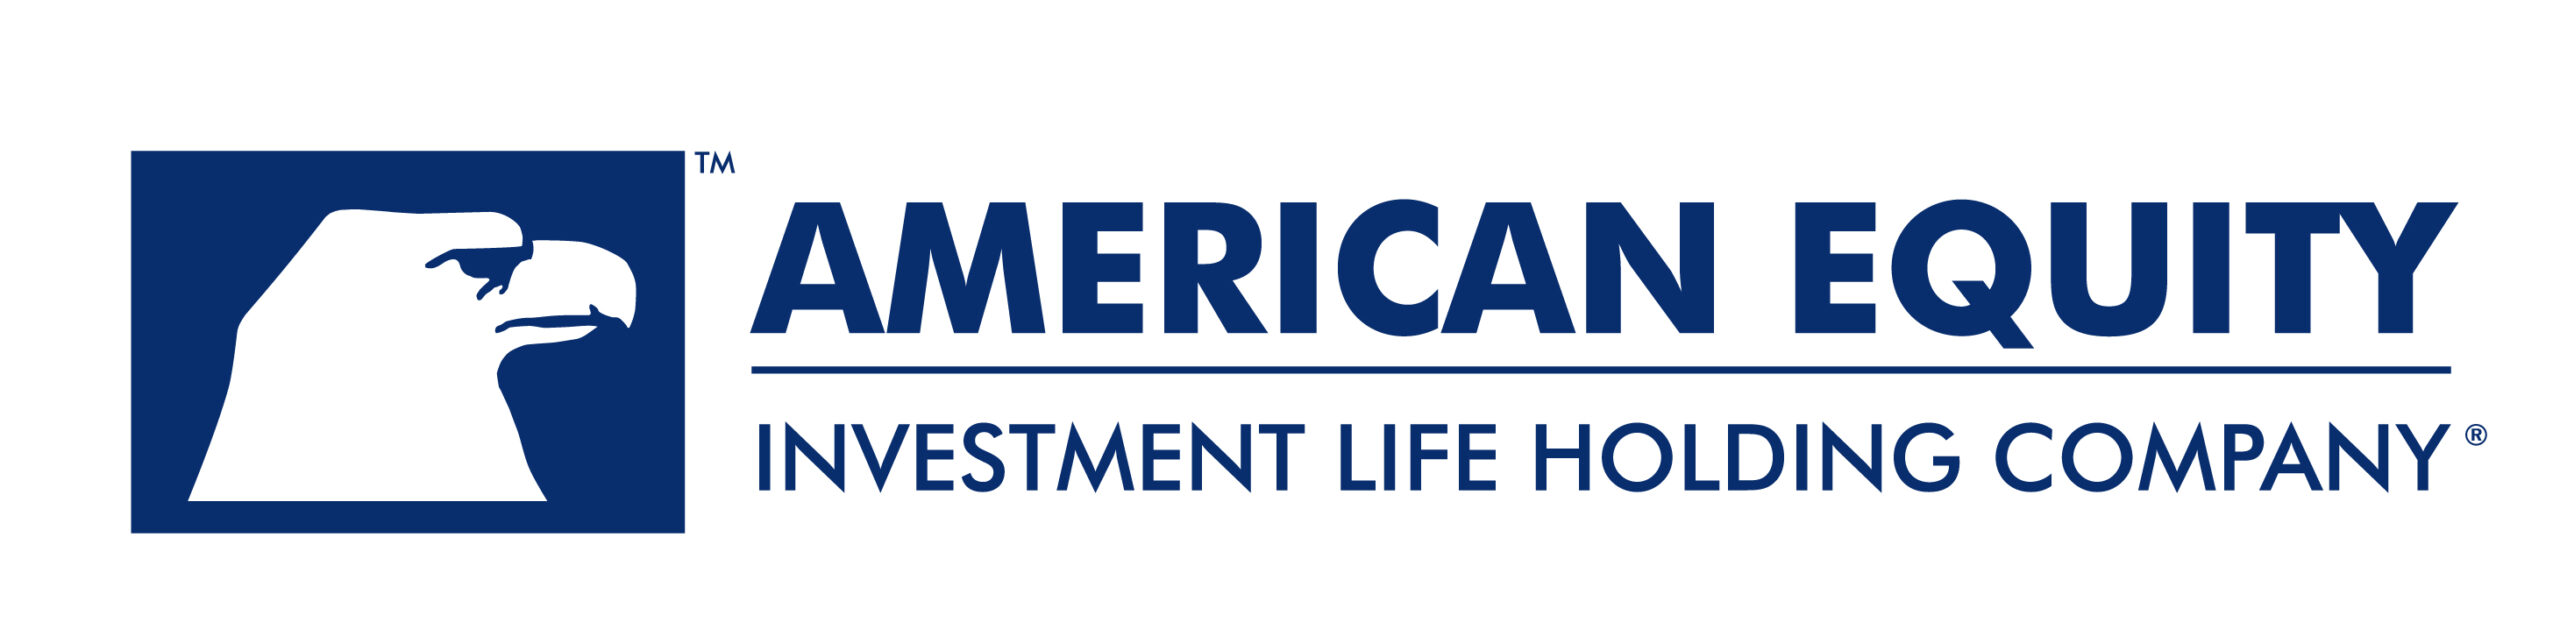 LQAR_Client_Logo-American Equities